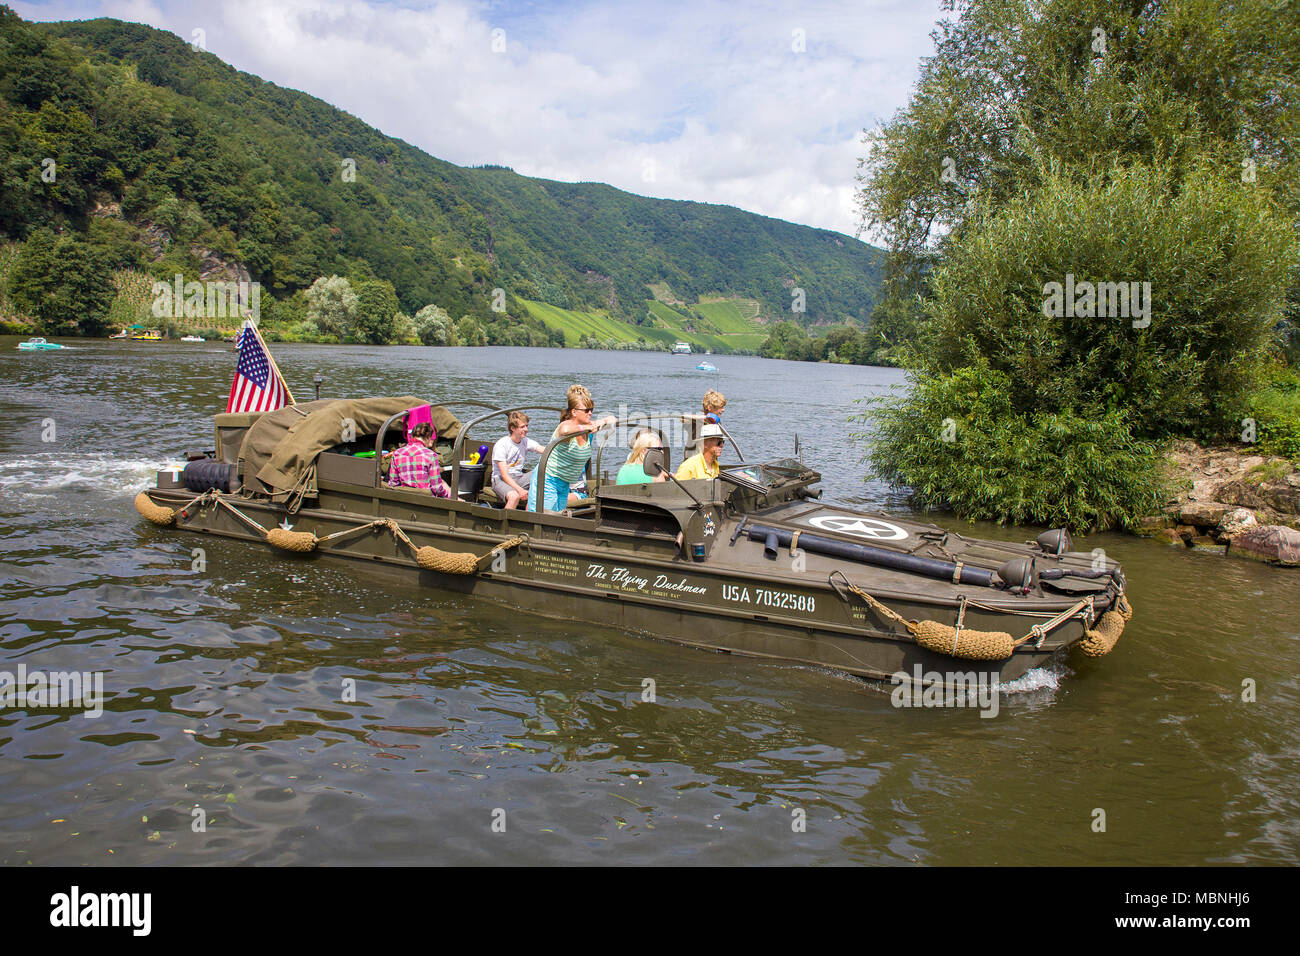 Military amphibious vehicle on Moselle river at Neumagen-Dhron, Rhineland-Palatinate, Germany Stock Photo